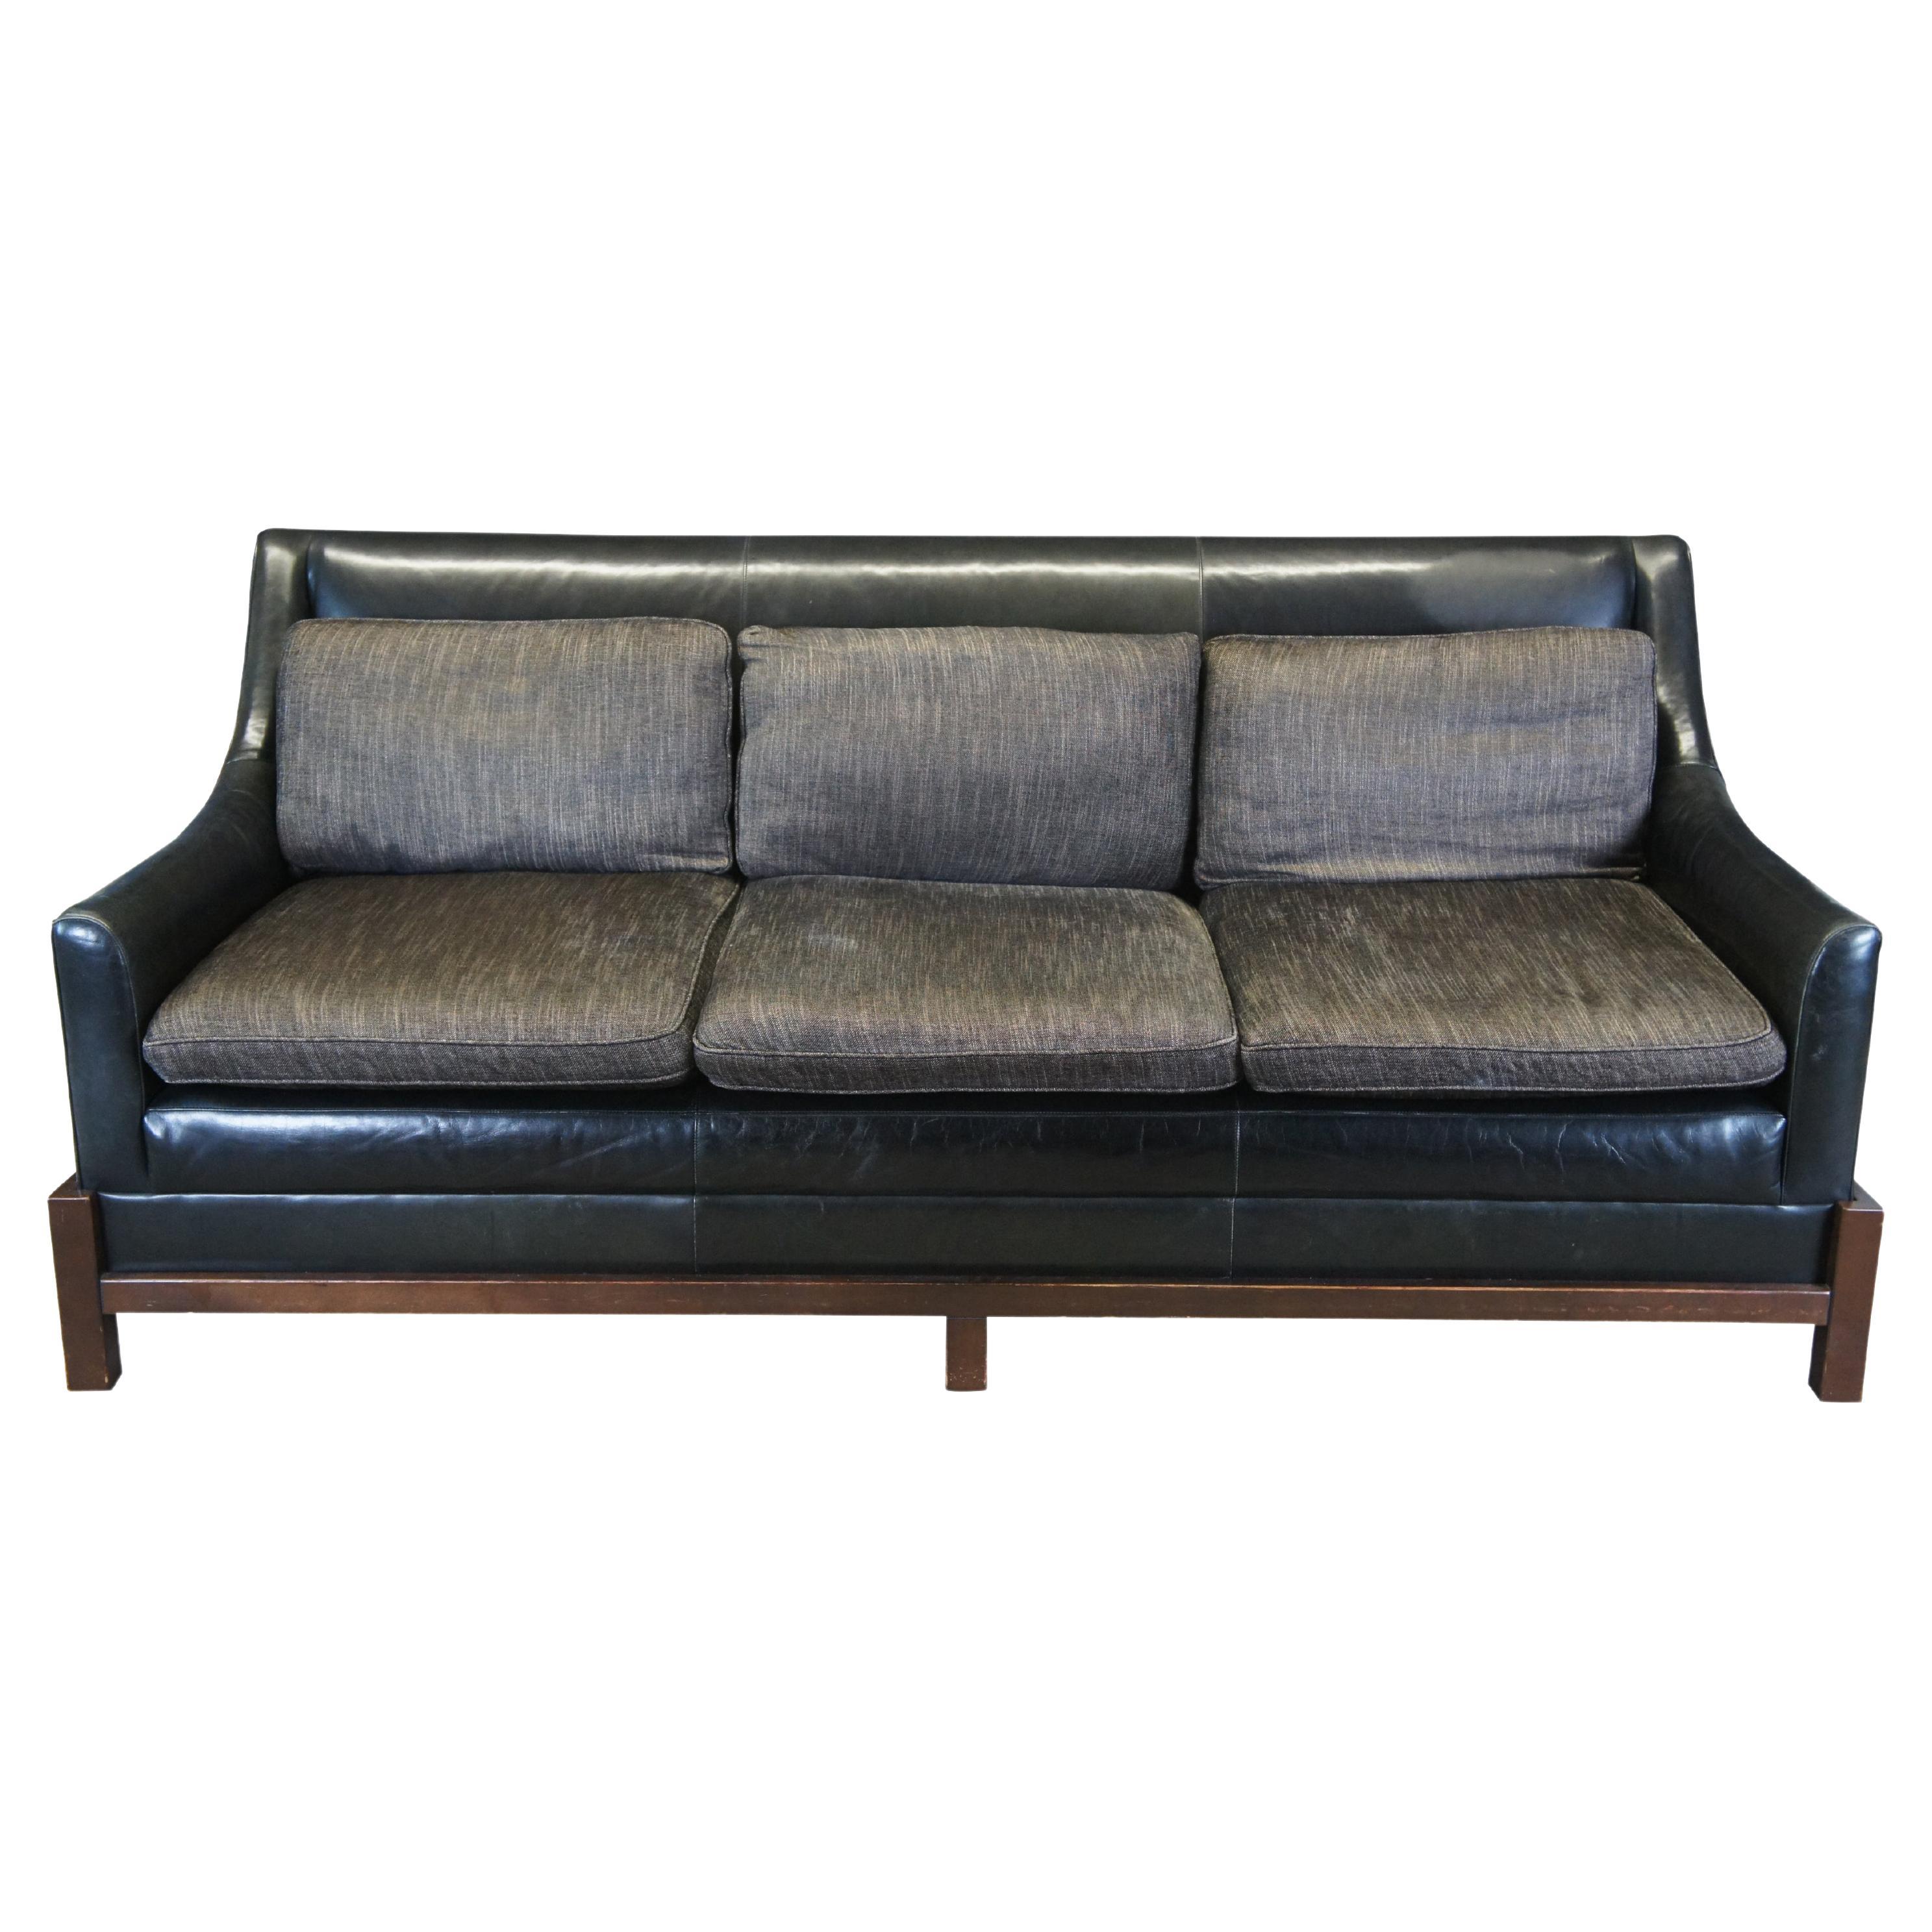 Vintage Baker Furniture Laura Kirar Modern Black Leather 3 Seater Neue Sofa For Sale